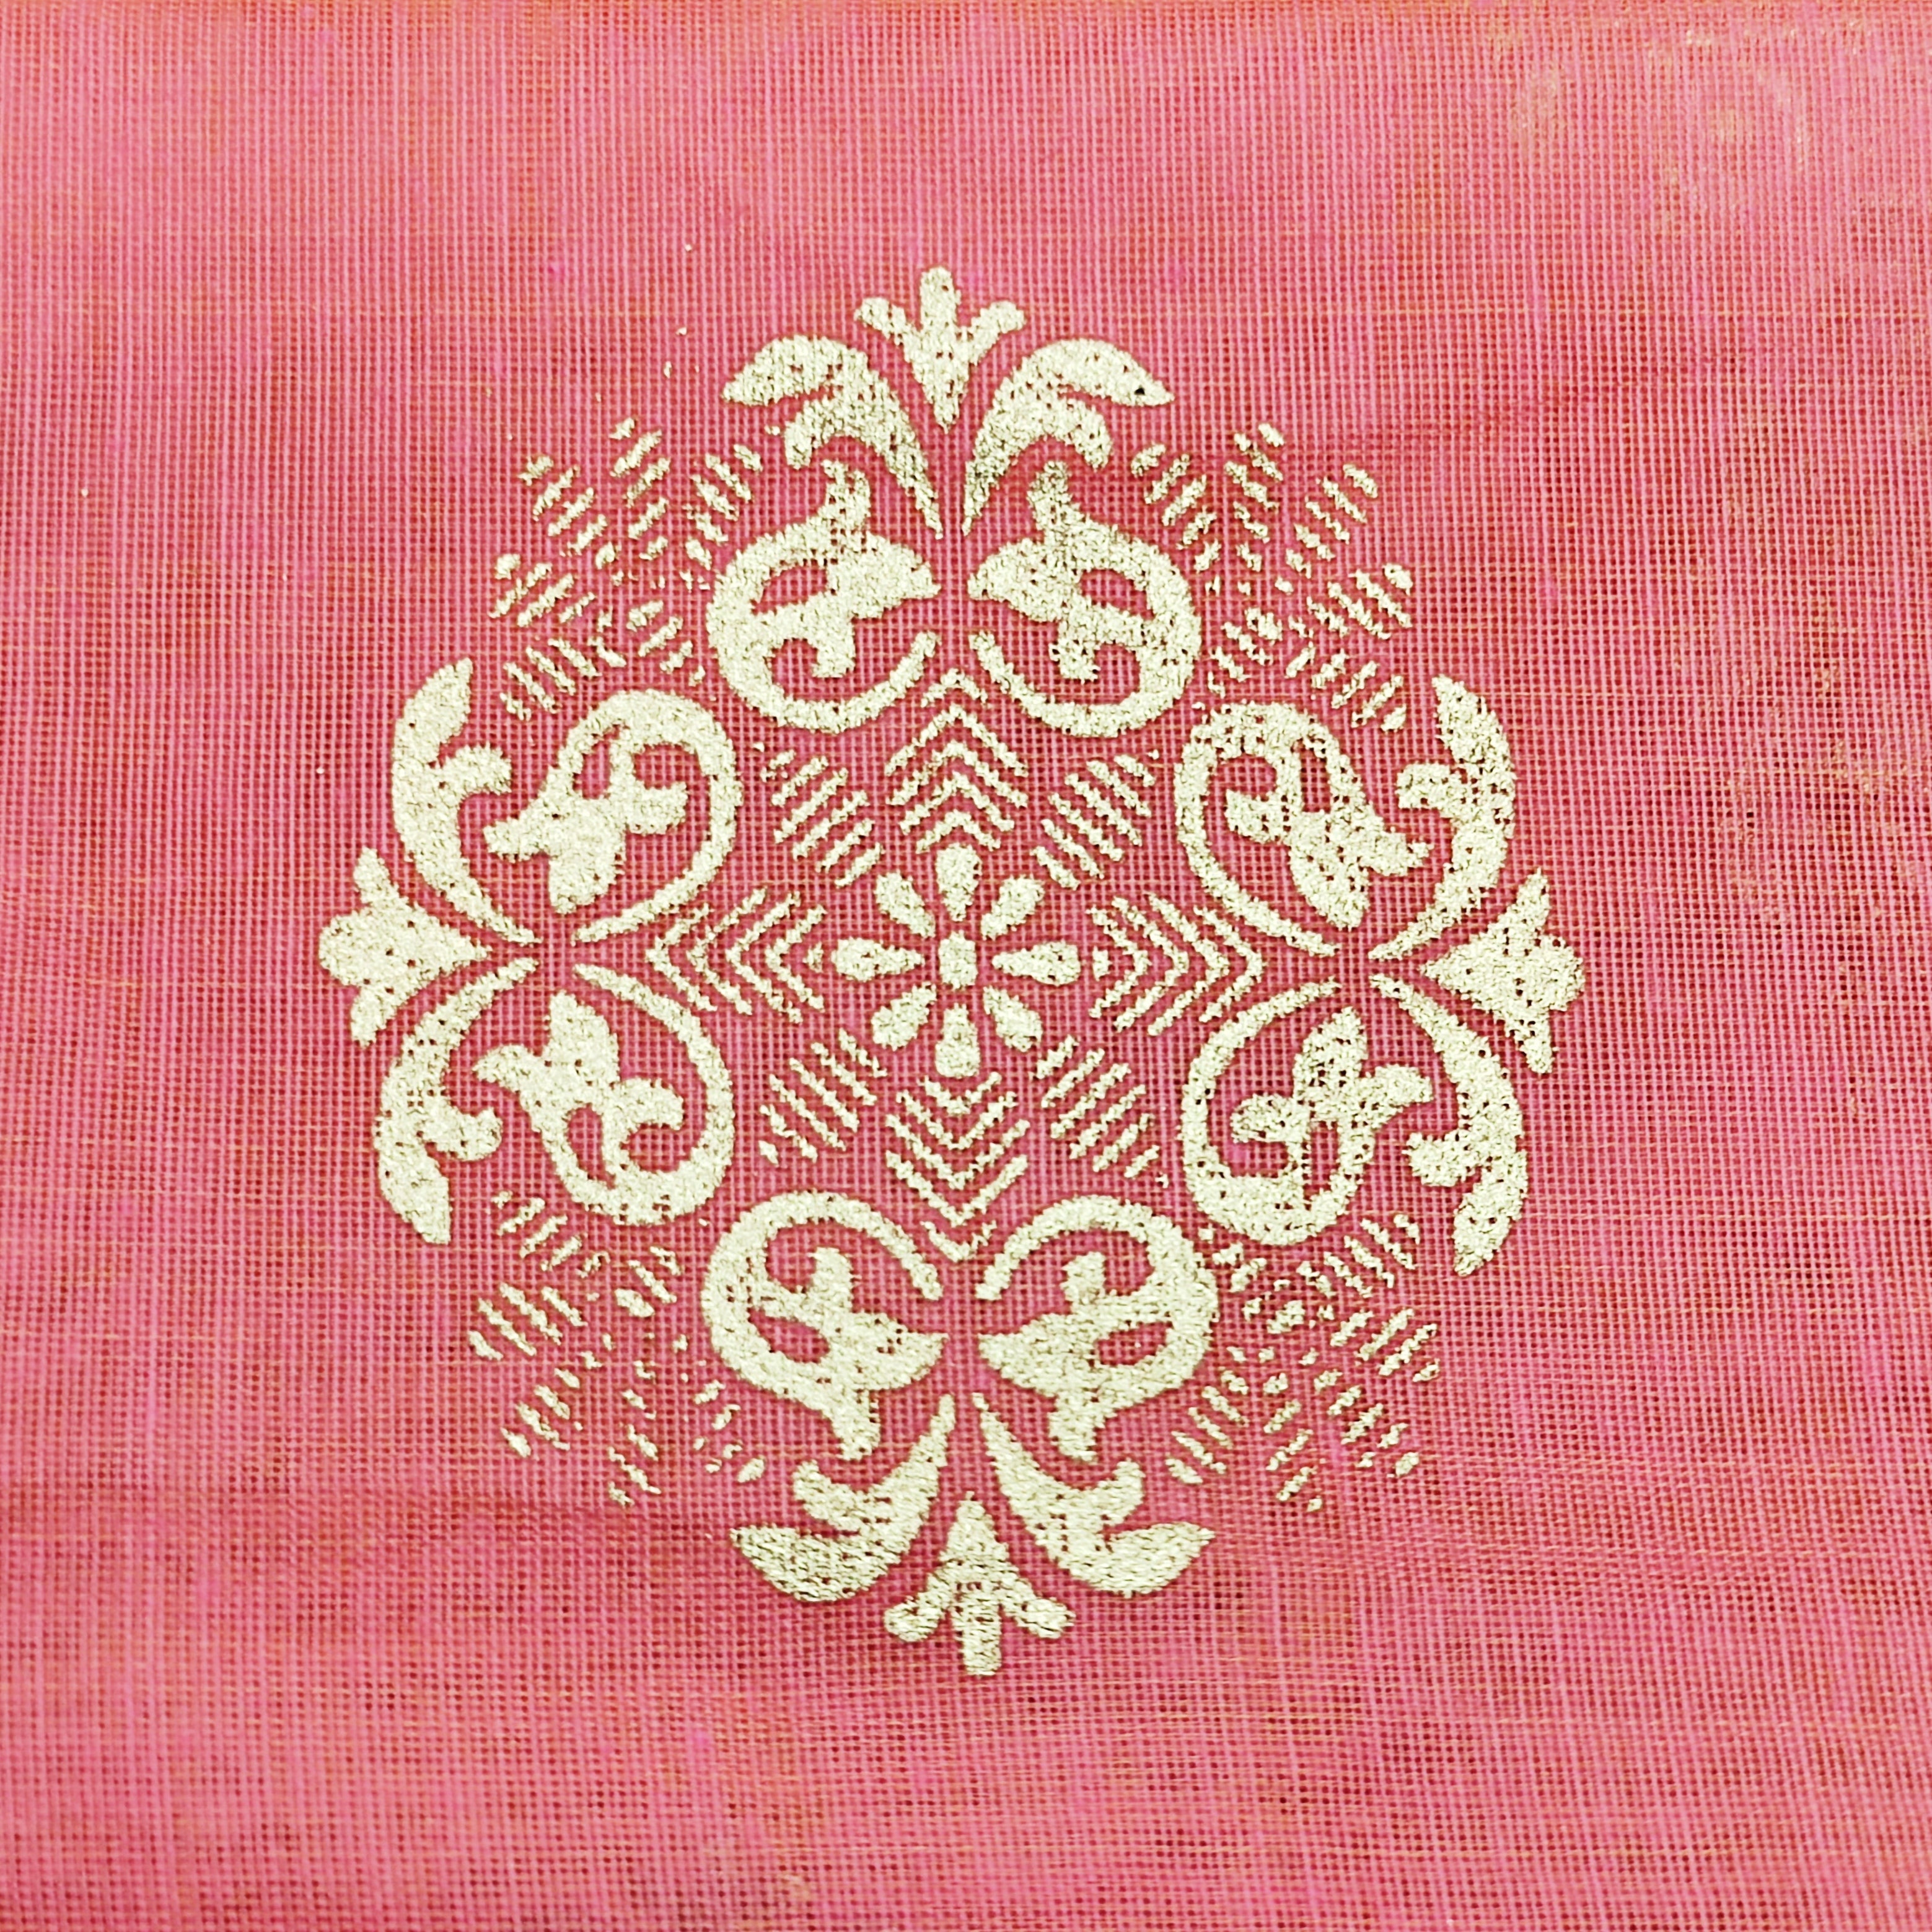 Women's Baby Pink Self Woven Gold Zari Paisley Design Cotton Silk Dupatta With Tassles - NIMIDHYA